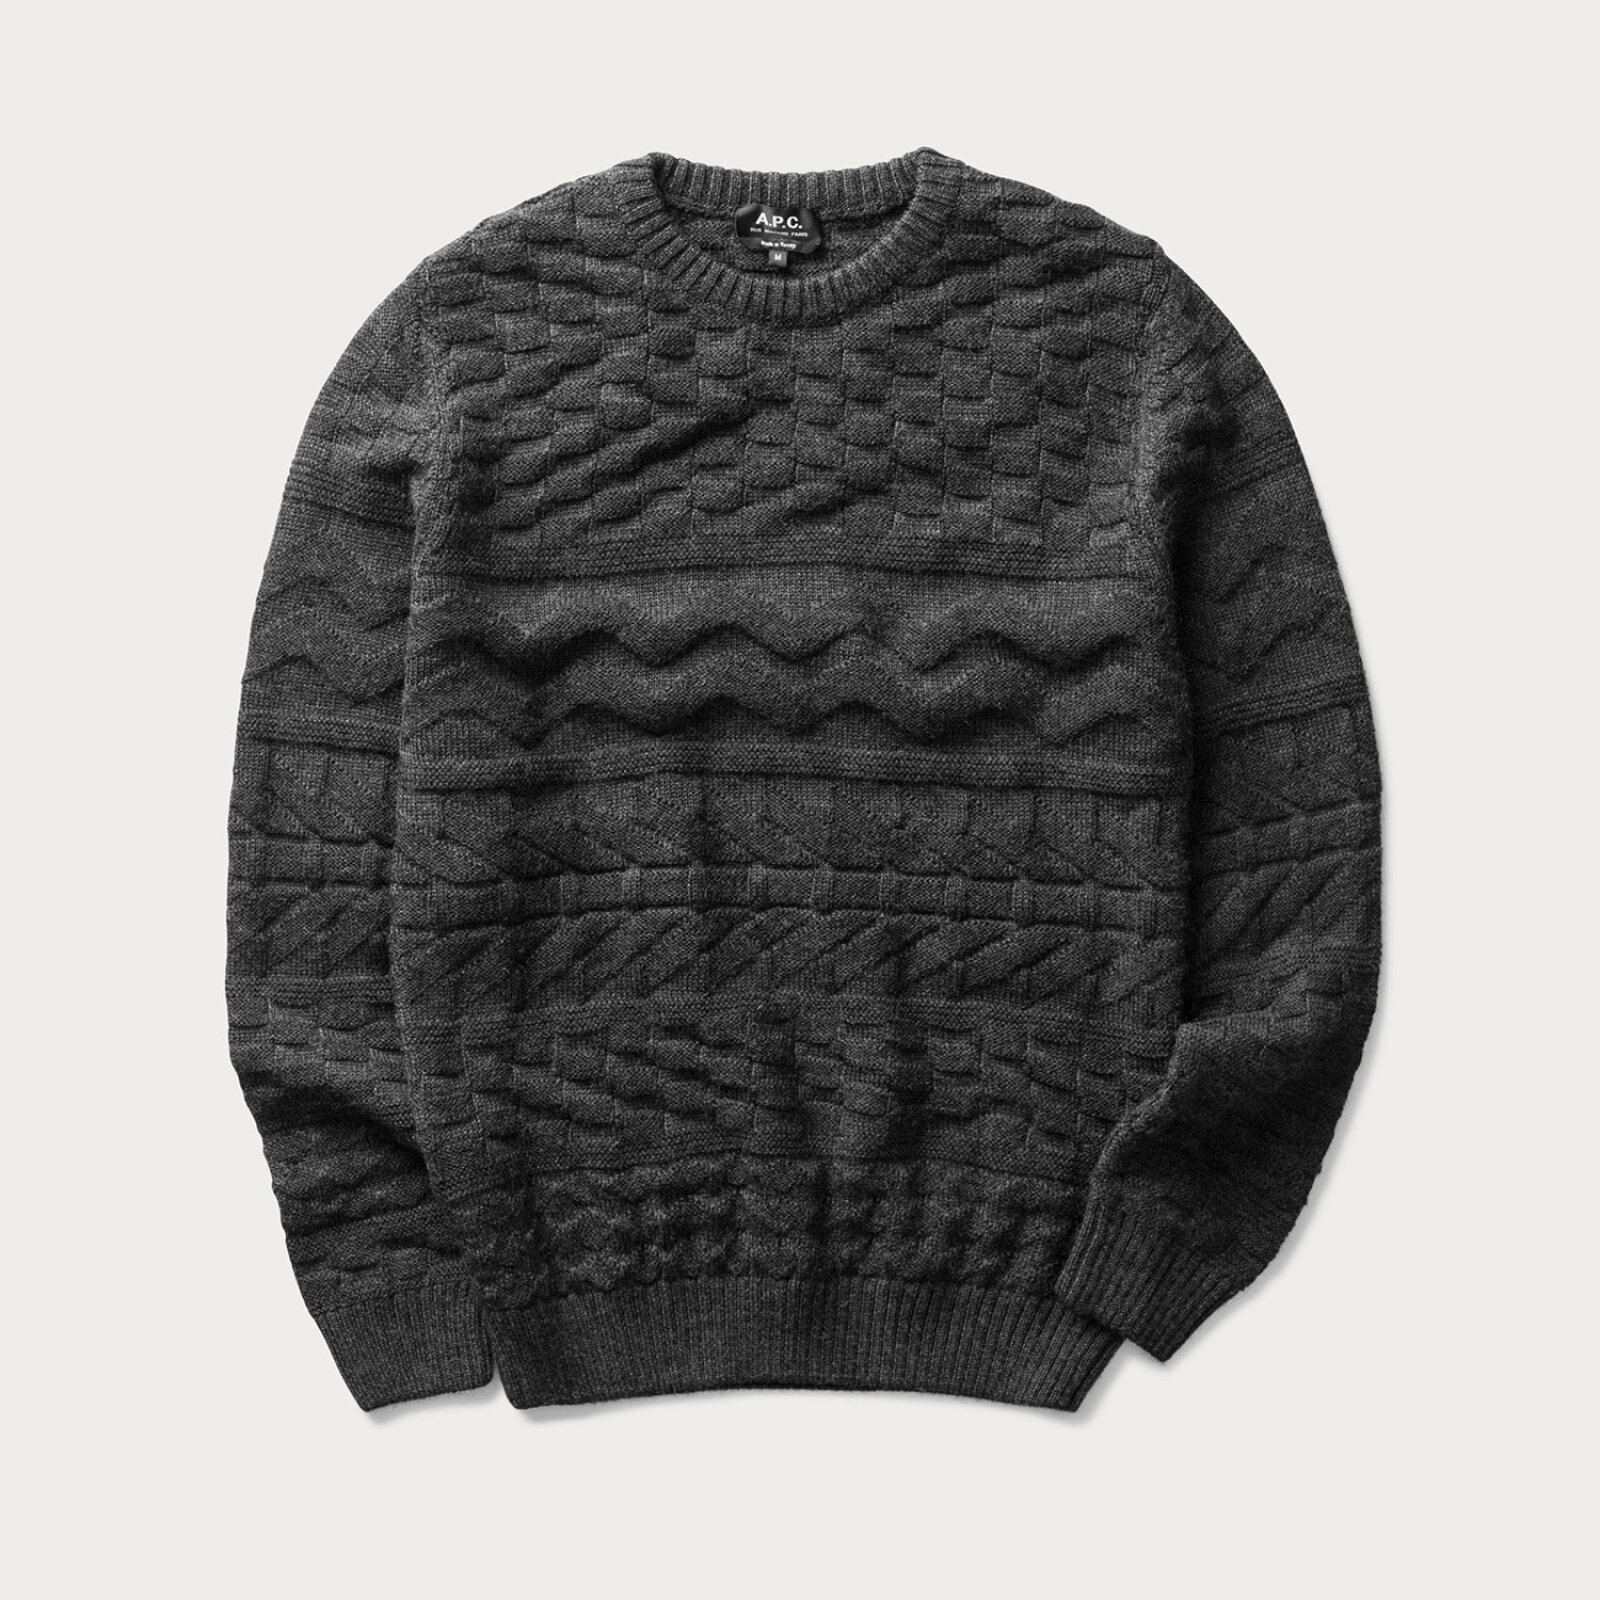 Norse Store | Shipping Worldwide - Knitwear Focus Autumn/Winter 18